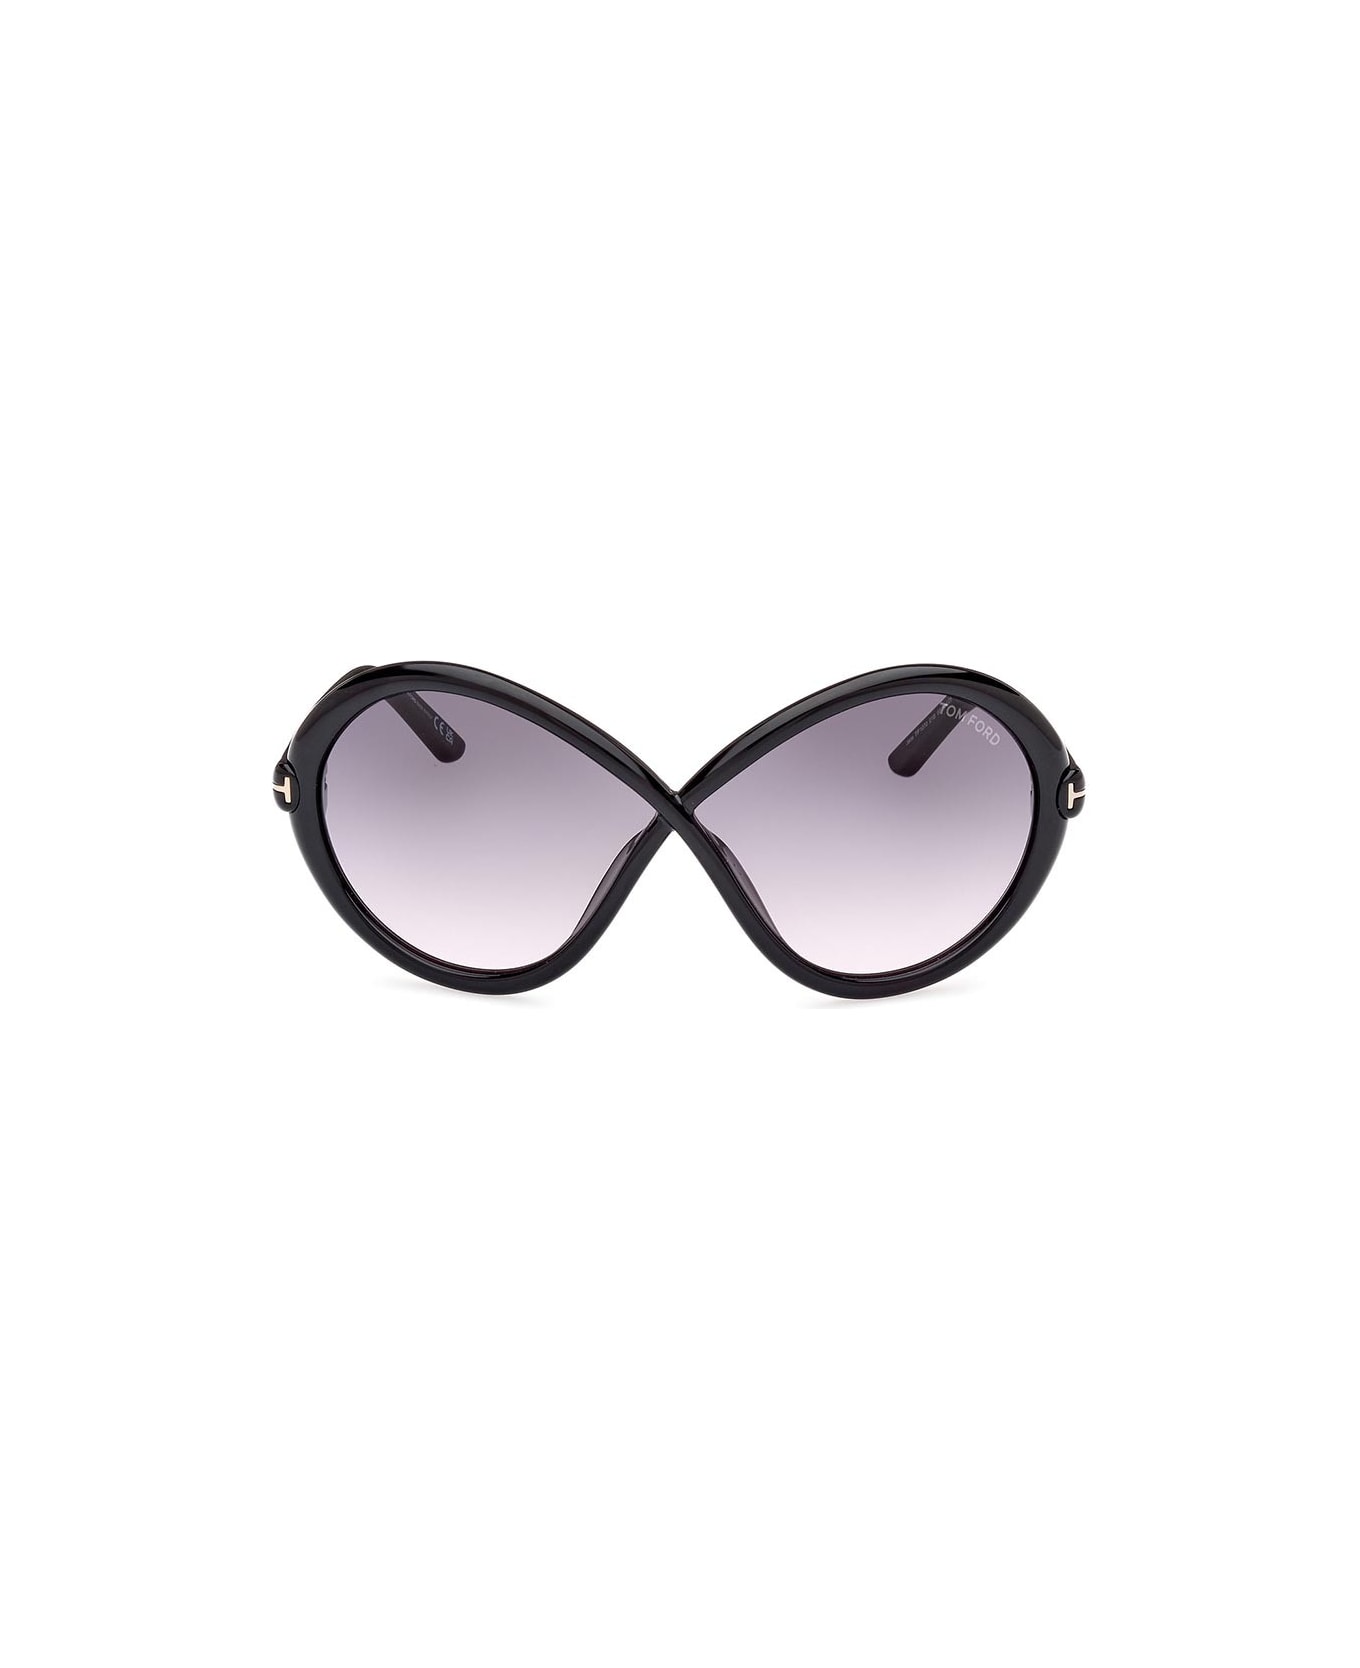 Tom Ford Eyewear Eyewear - Nero/Grigio アイウェア